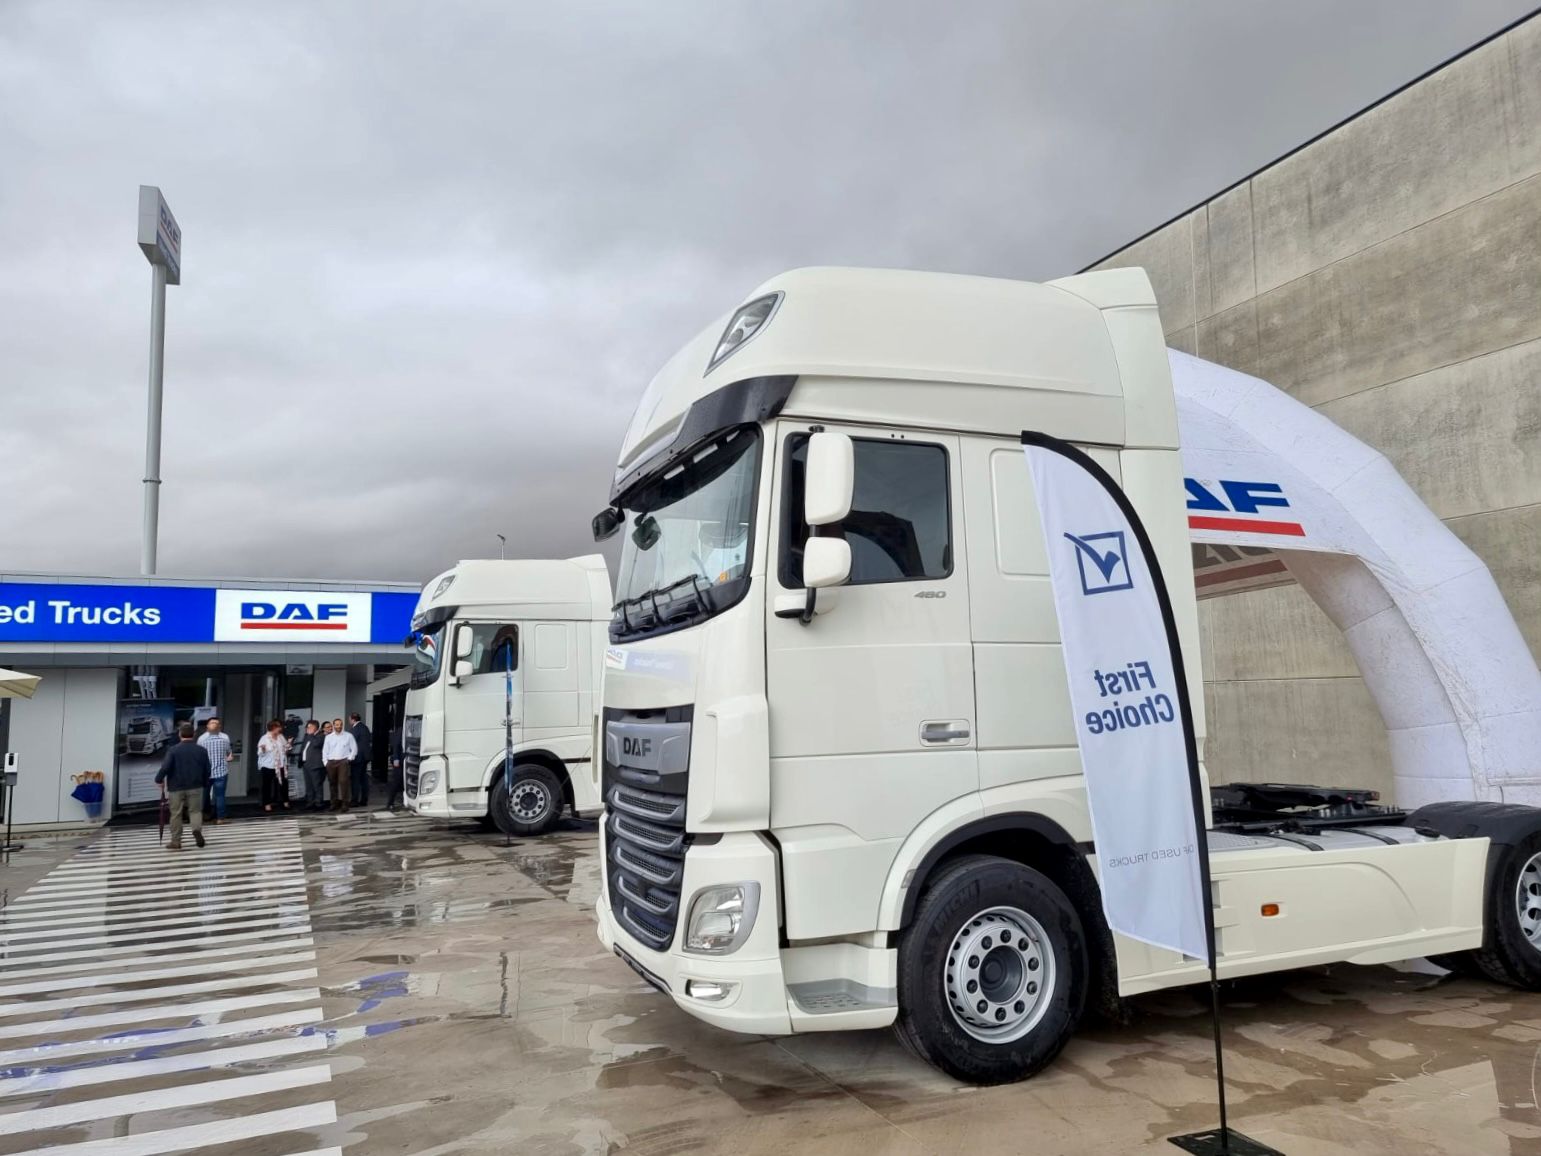 El DAF Used Trucks España espera vender 300 usados